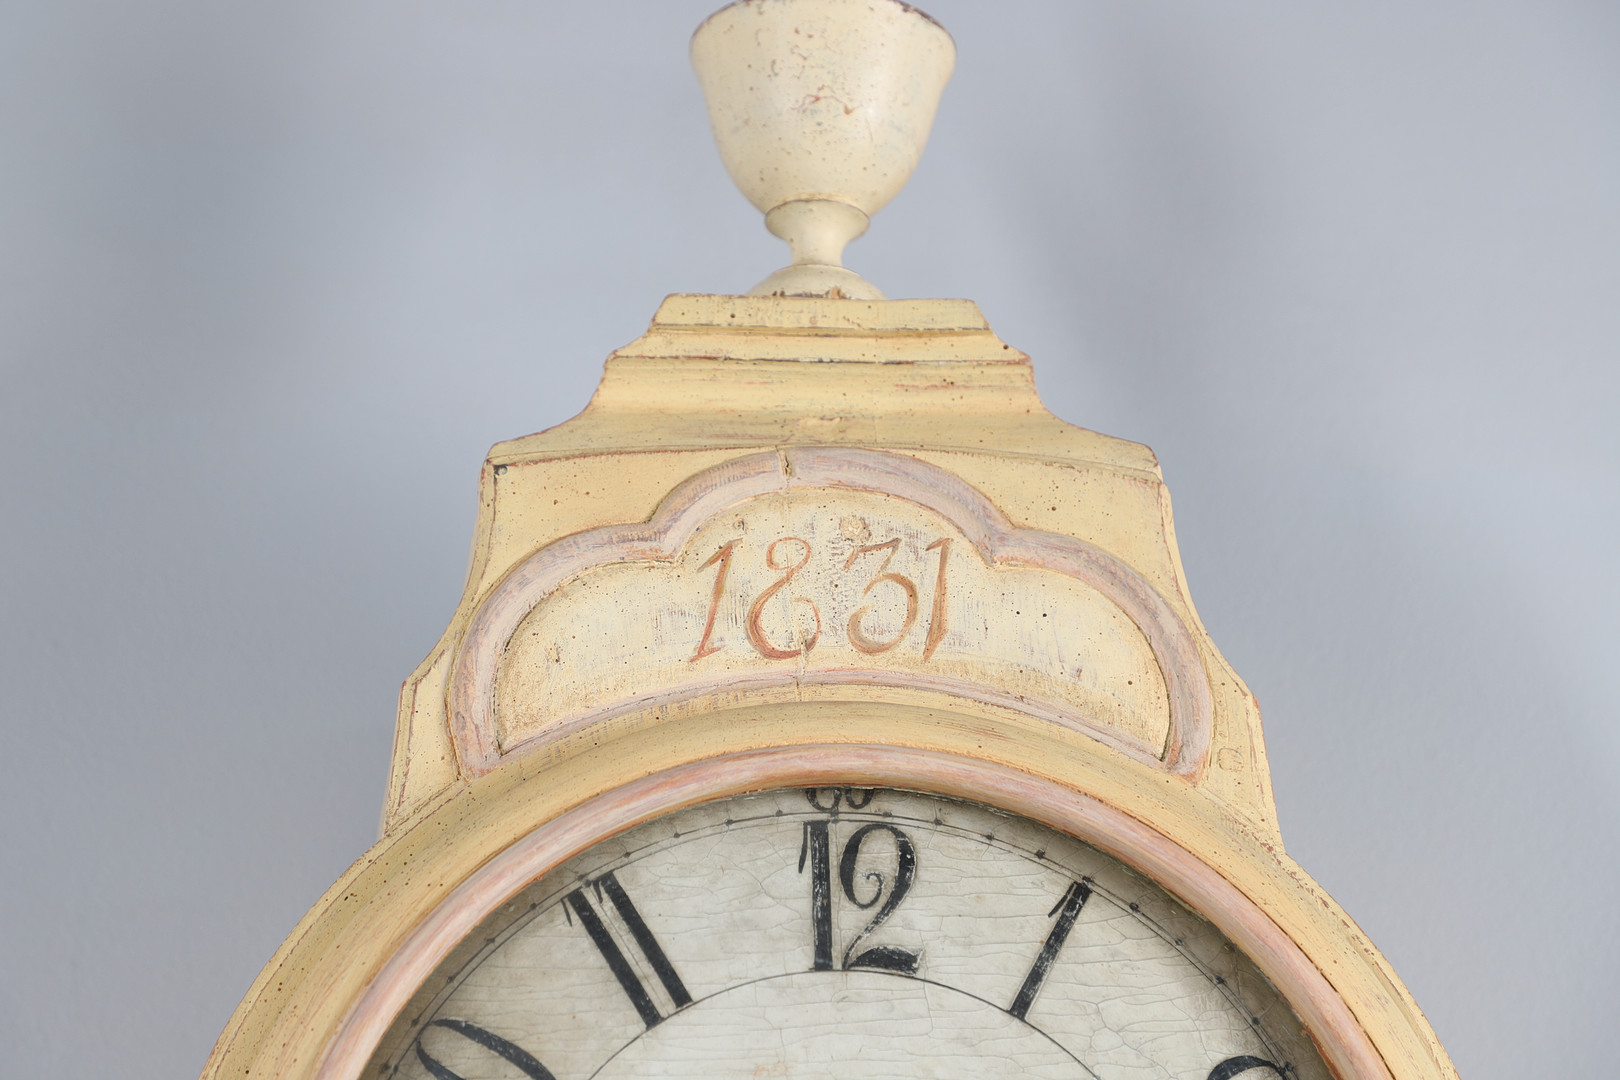 A 19TH CENTURY FINNISH 'COMTOISE' CLOCK, Ã–STROBOTHNIA REGION. - Image 4 of 26